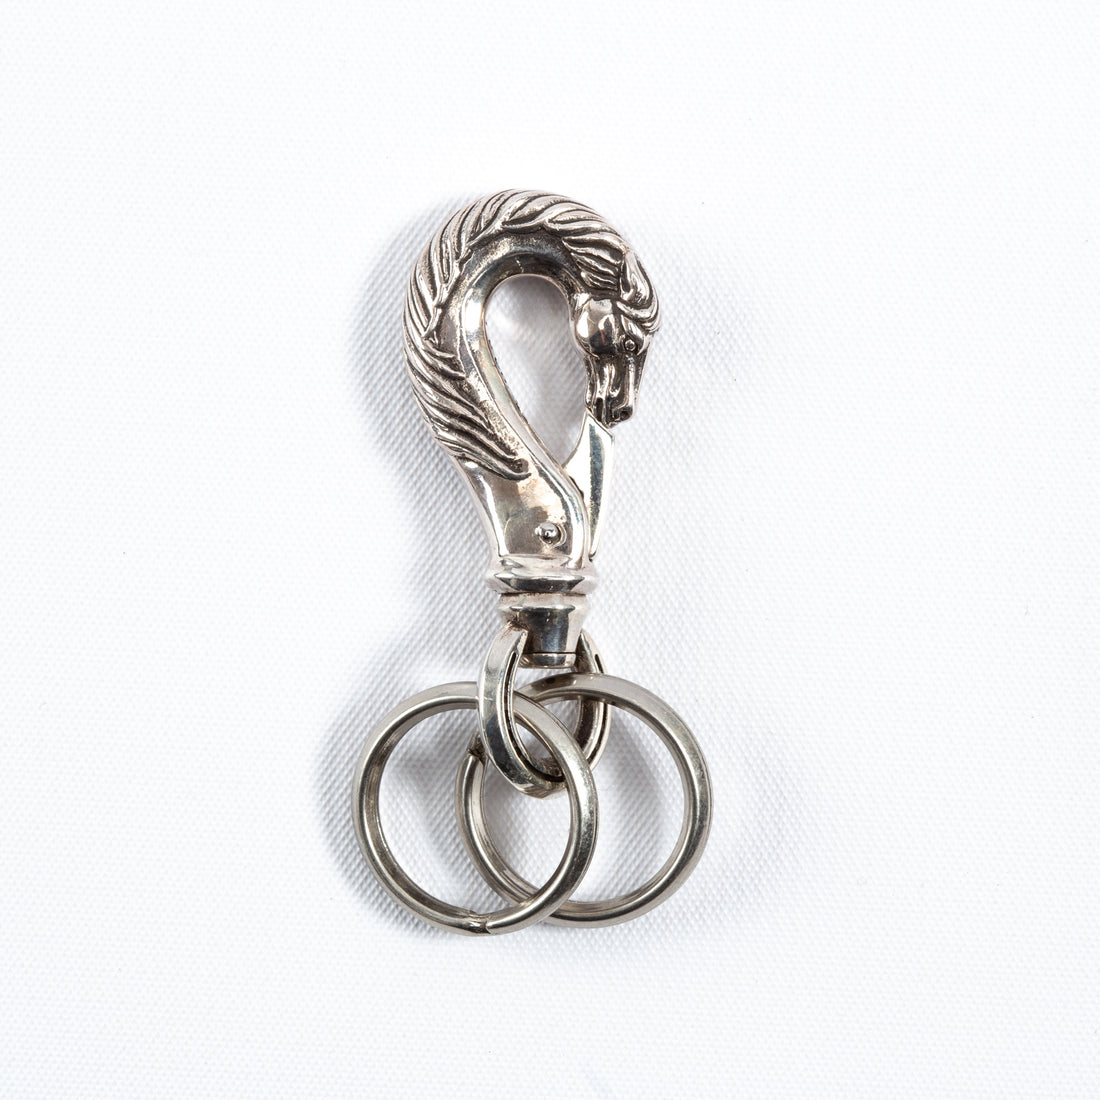 Peanuts & Co Horse Key Hook - Silver - Medium - Standard & Strange